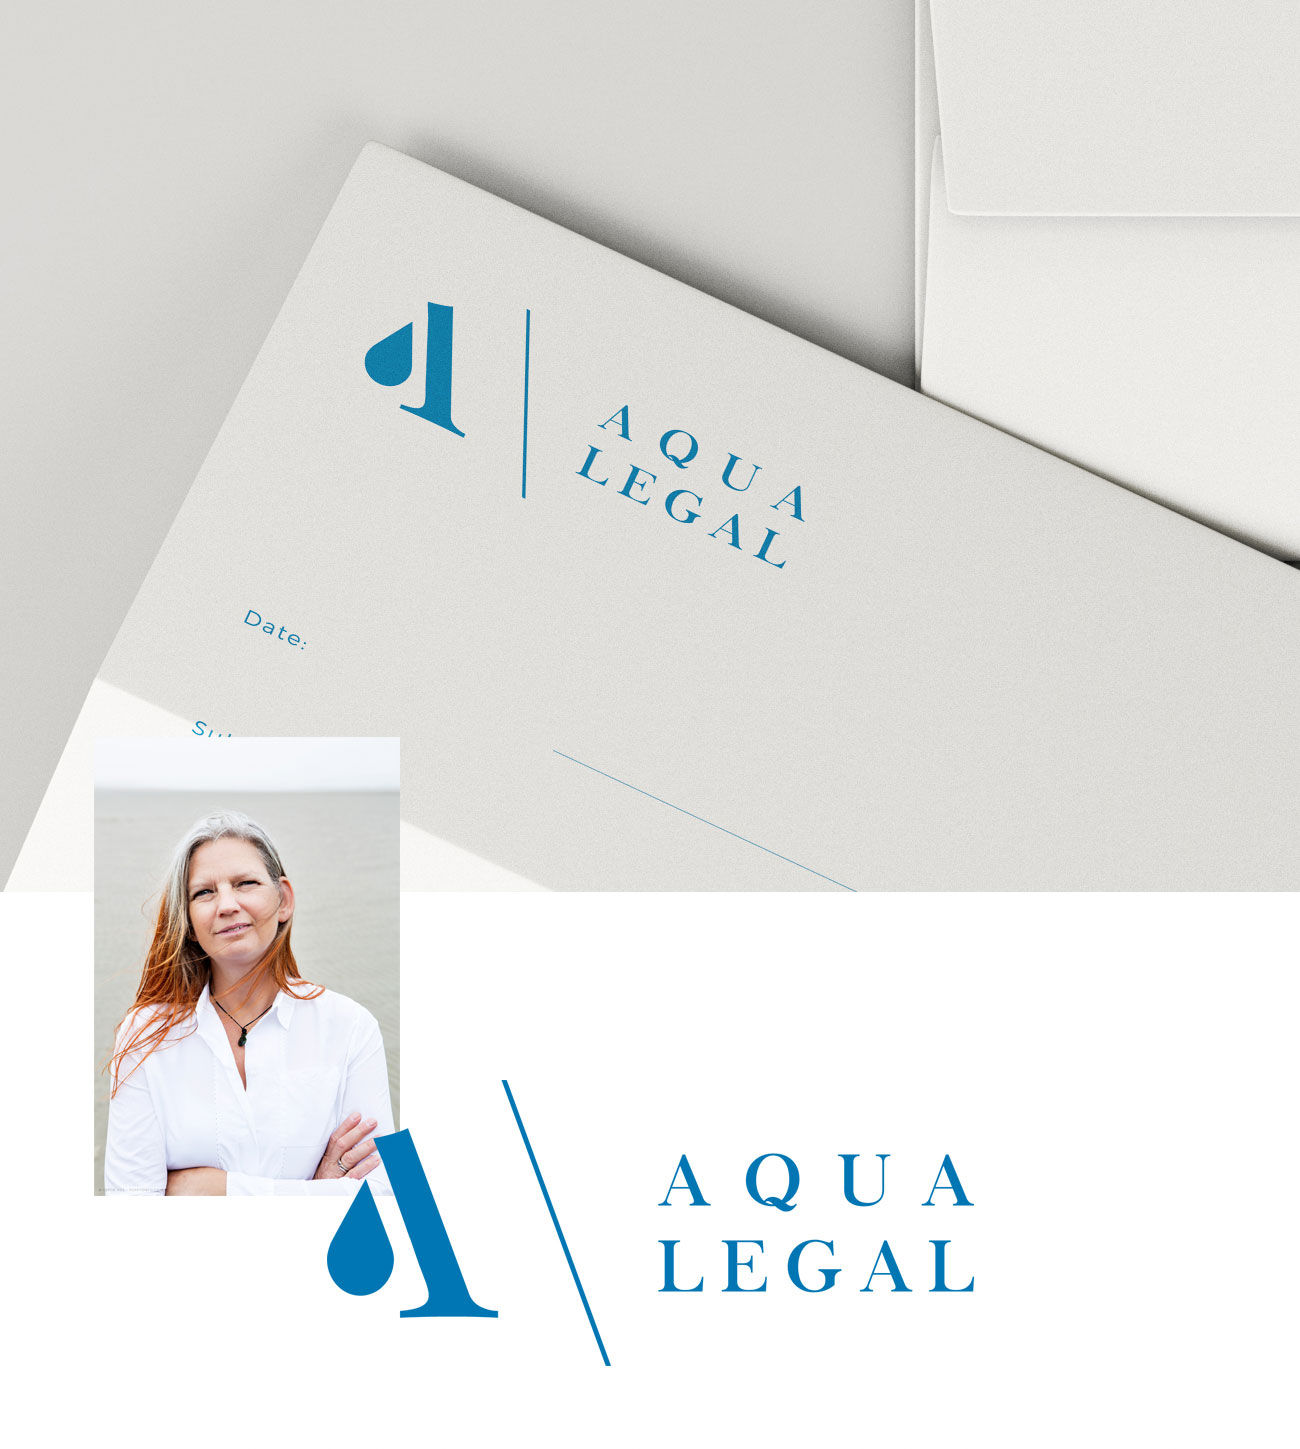 Branding Identity logo design business cards letterhead and portrait photography for Aqua Legal Marjolein van Laere by Poppyonto